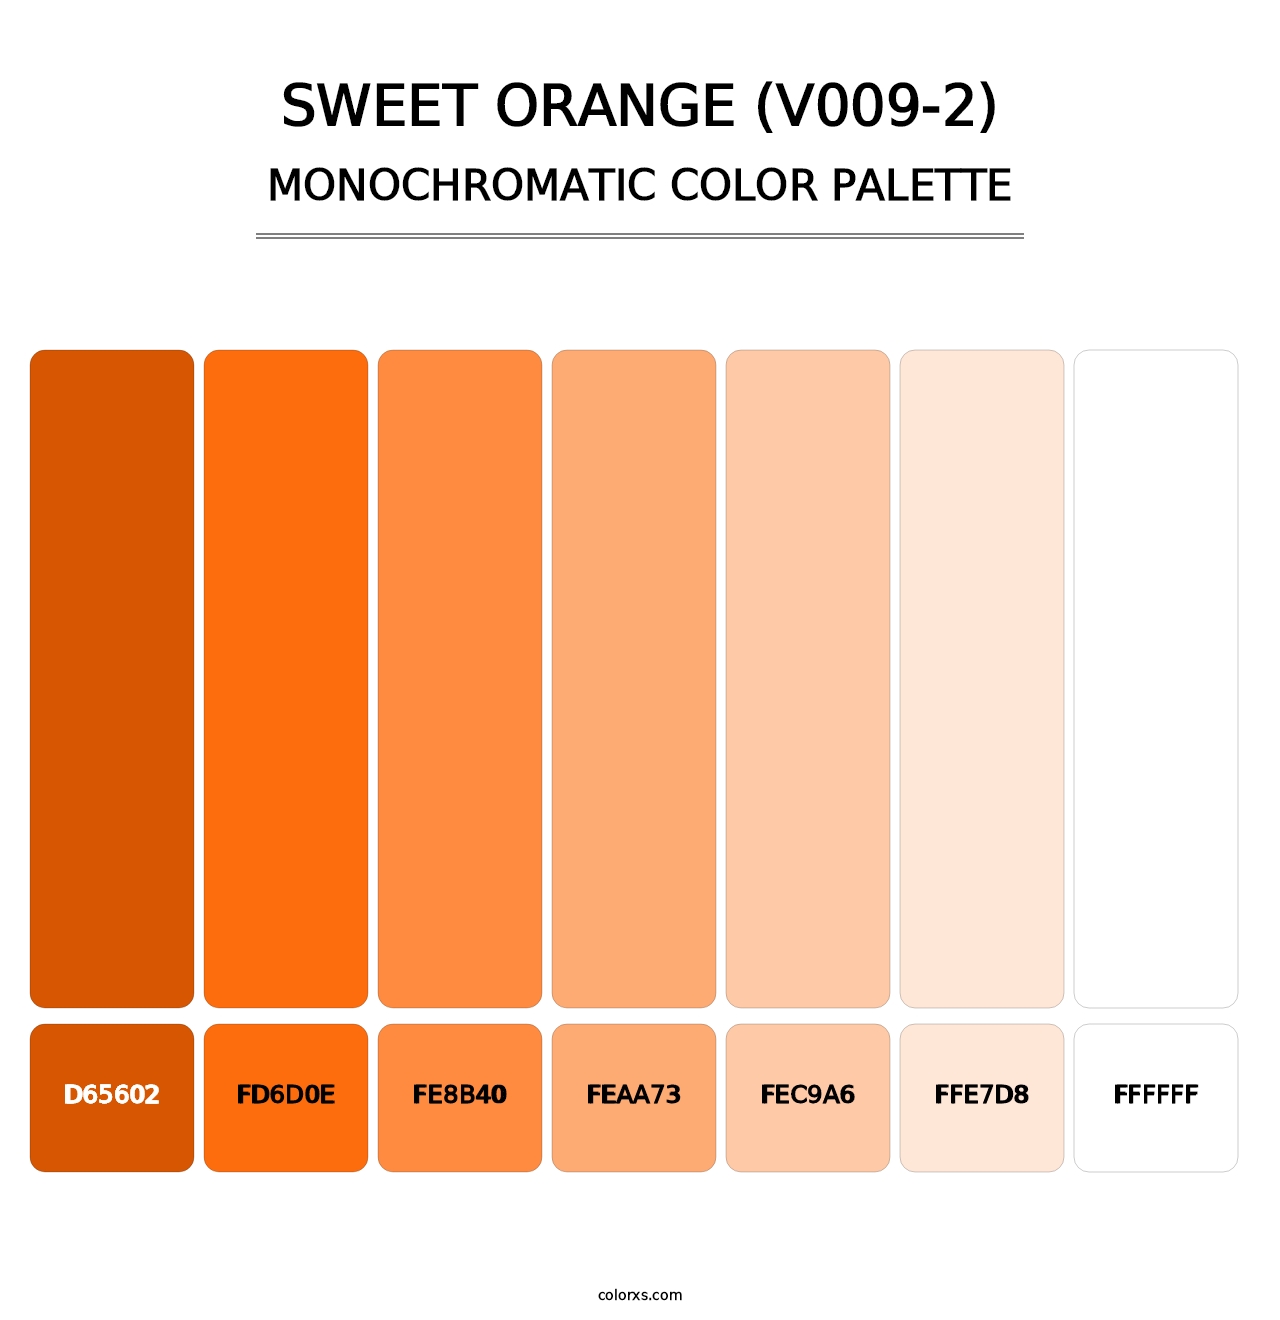 Sweet Orange (V009-2) - Monochromatic Color Palette